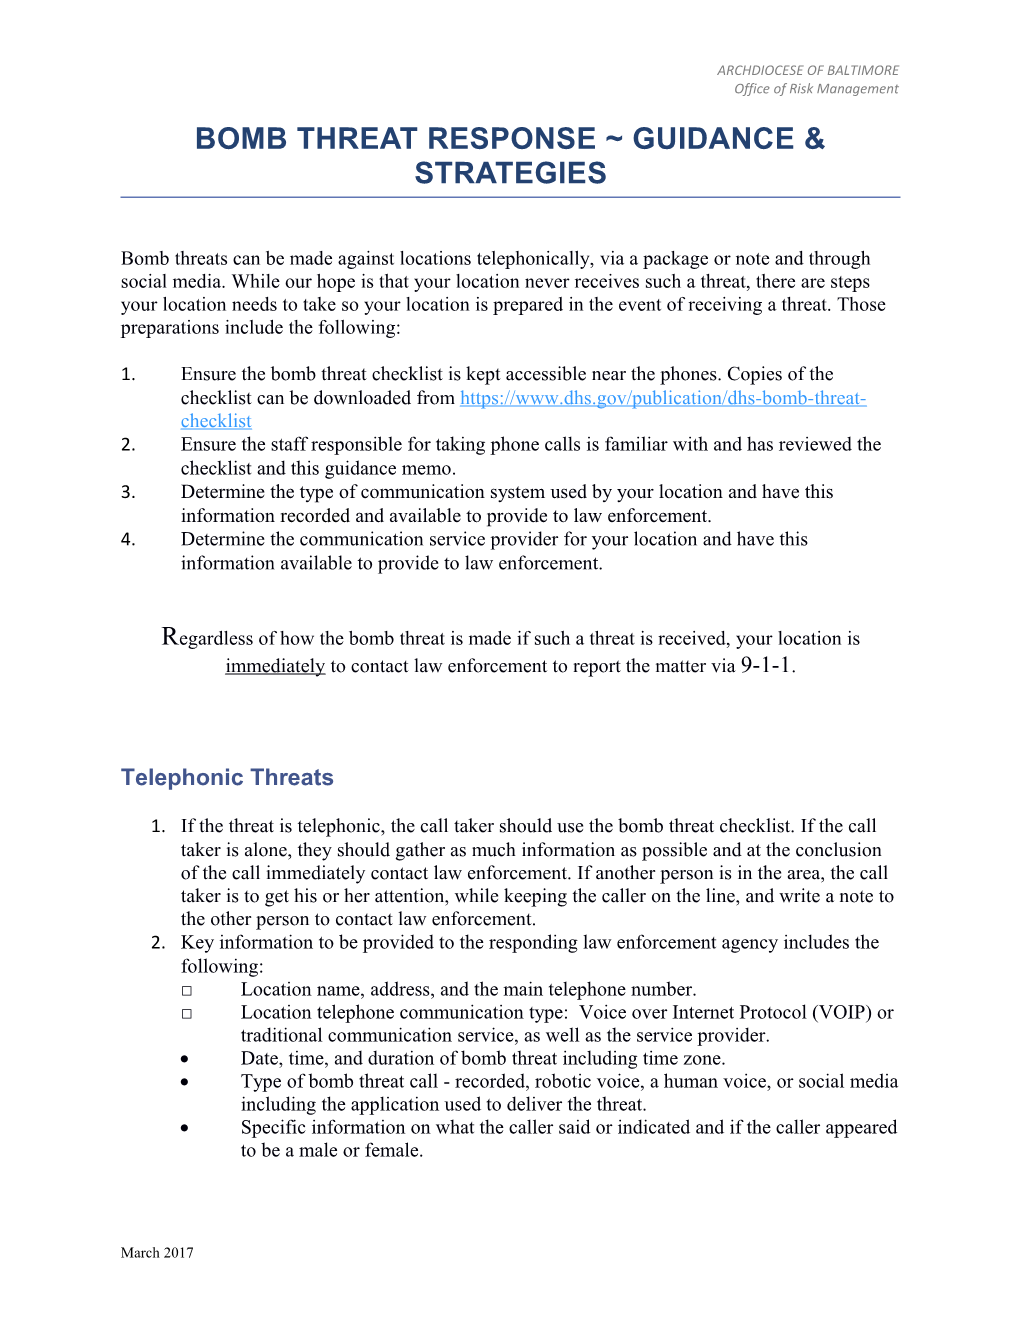 Bomb Threat Response Guidance & Strategies